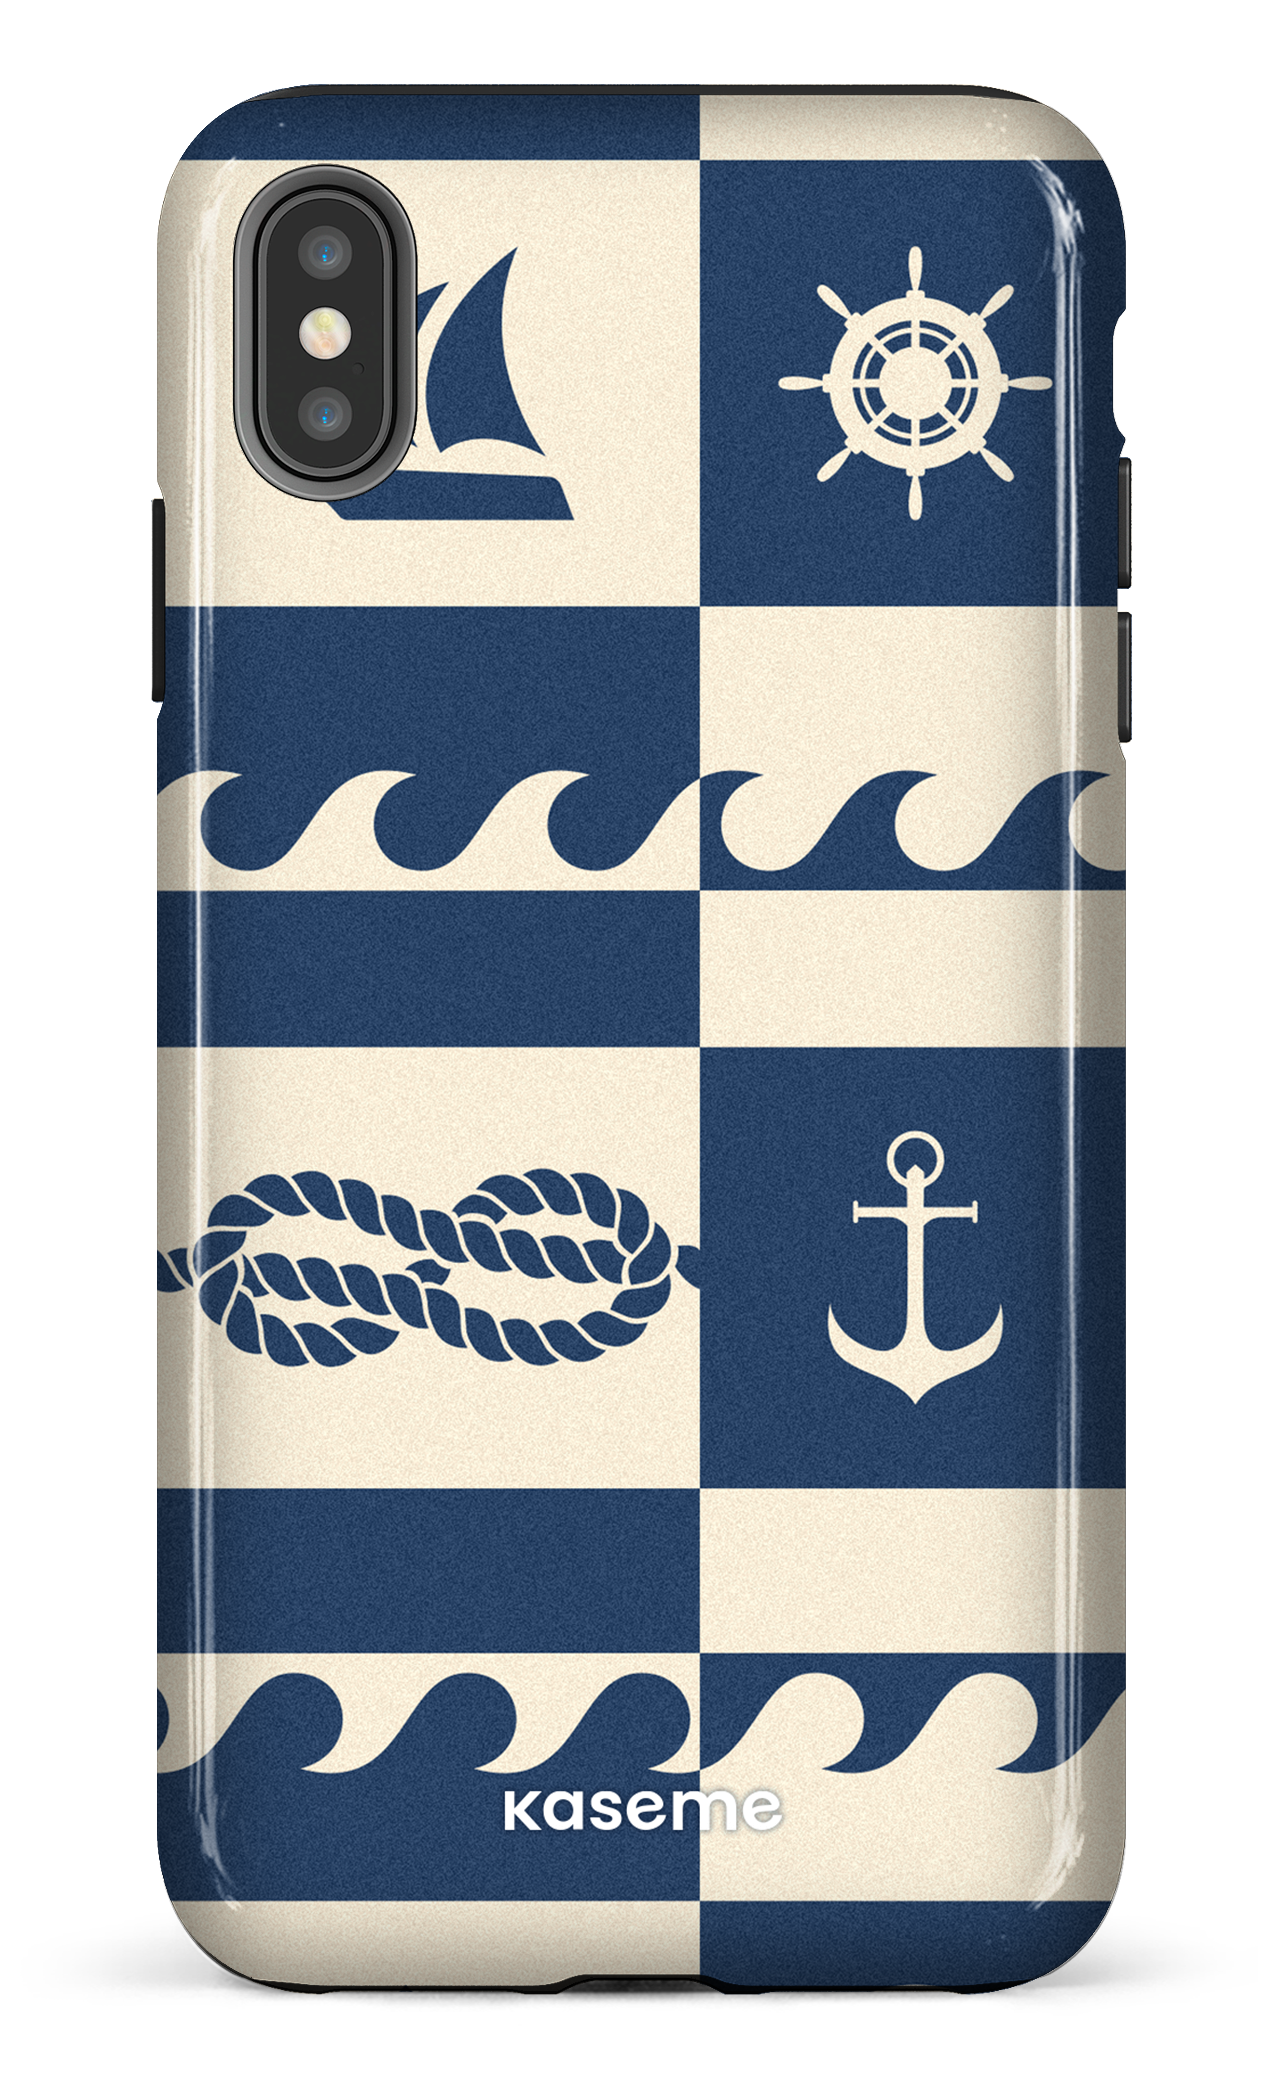 Sail - iPhone XS Max